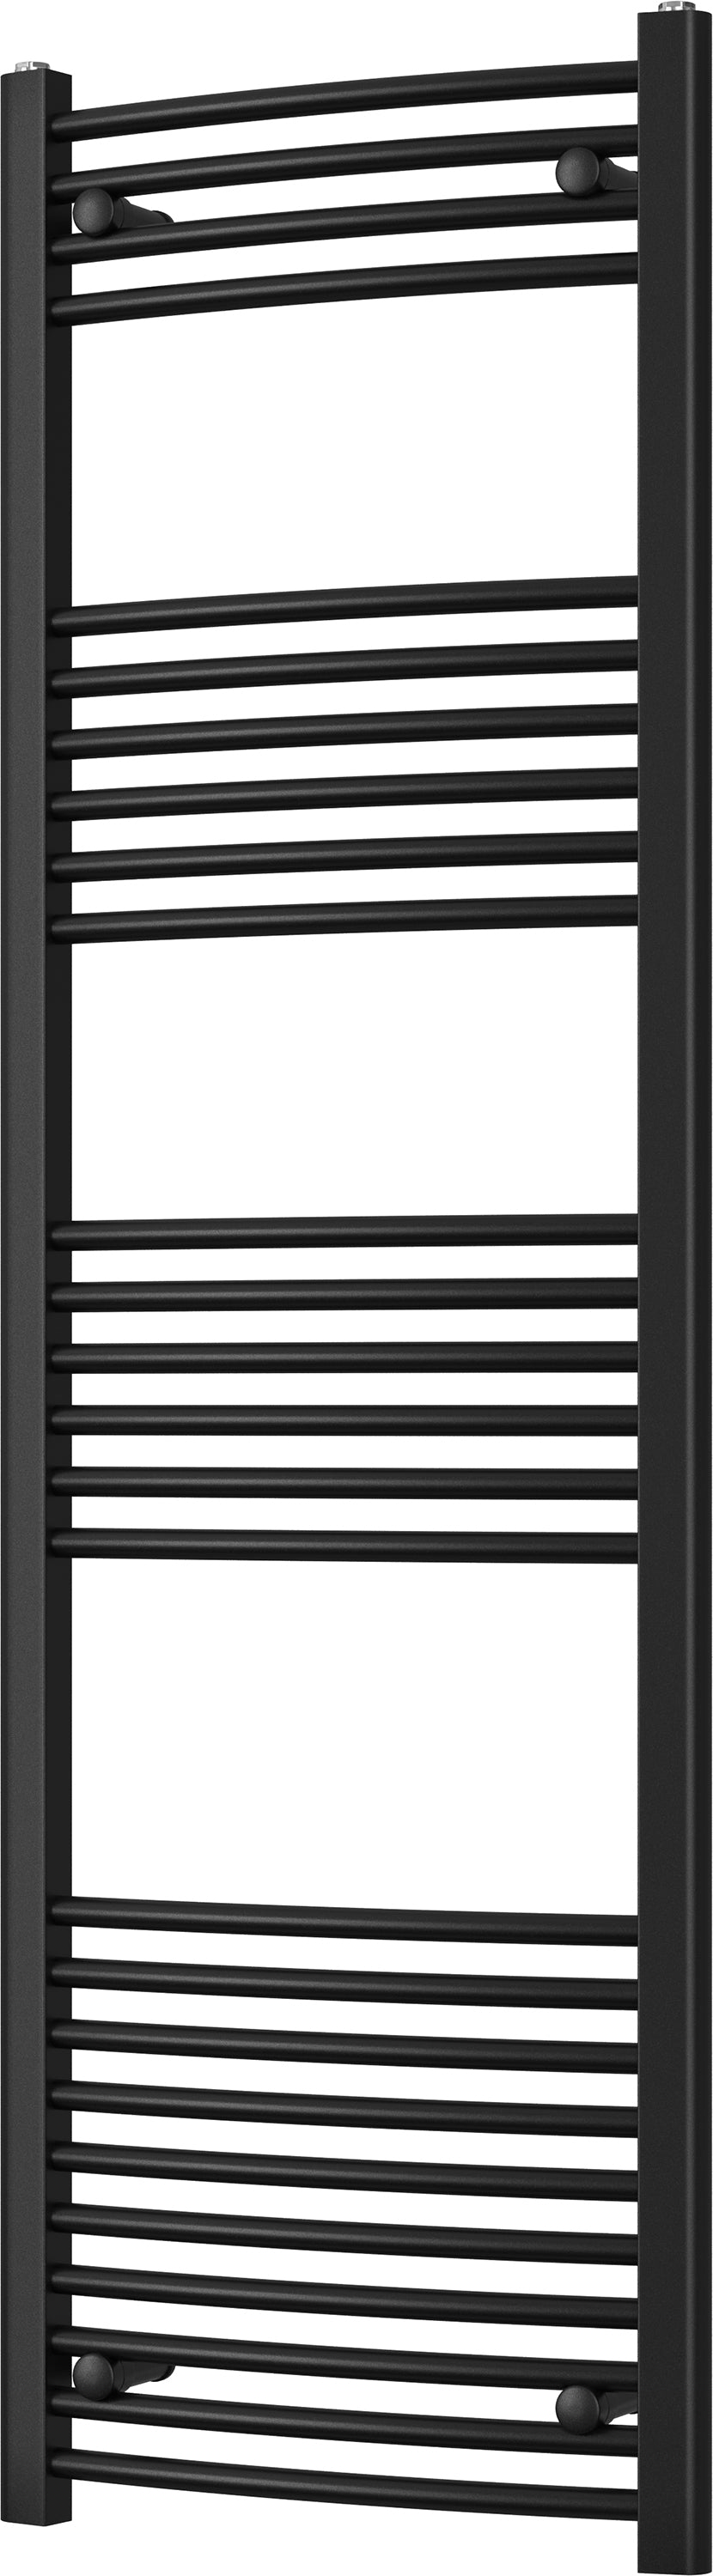 Zennor - Black Heated Towel Rail - H1600mm x W500mm - Curved